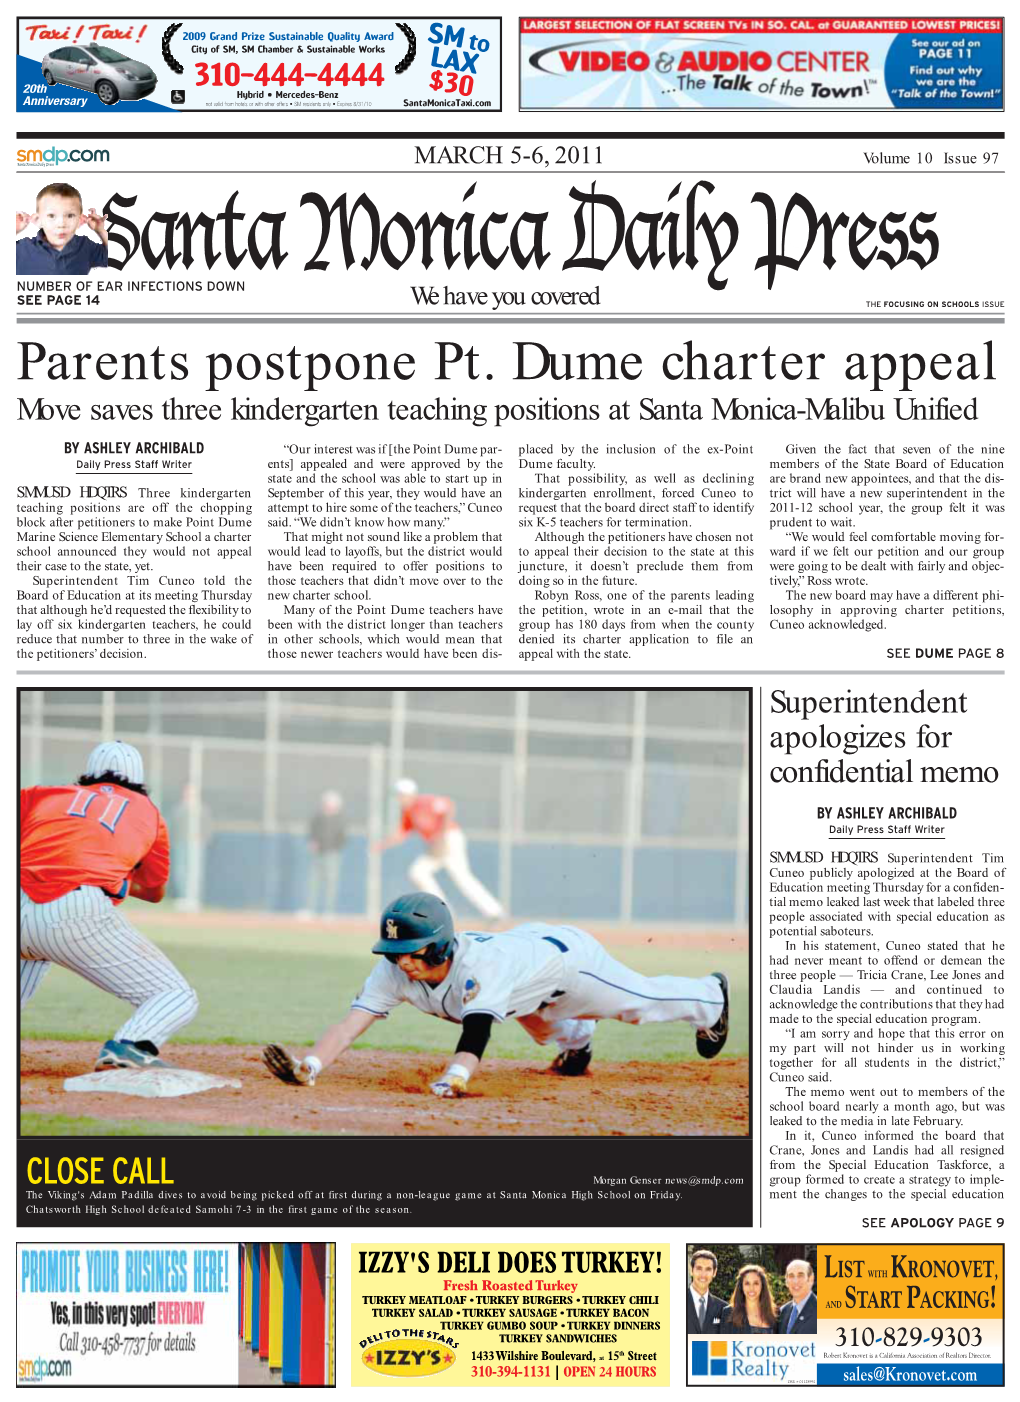 Parents Postpone Pt. Dume Charter Appeal Move Saves Three Kindergarten Teaching Positions at Santa Monica-Malibu Unified